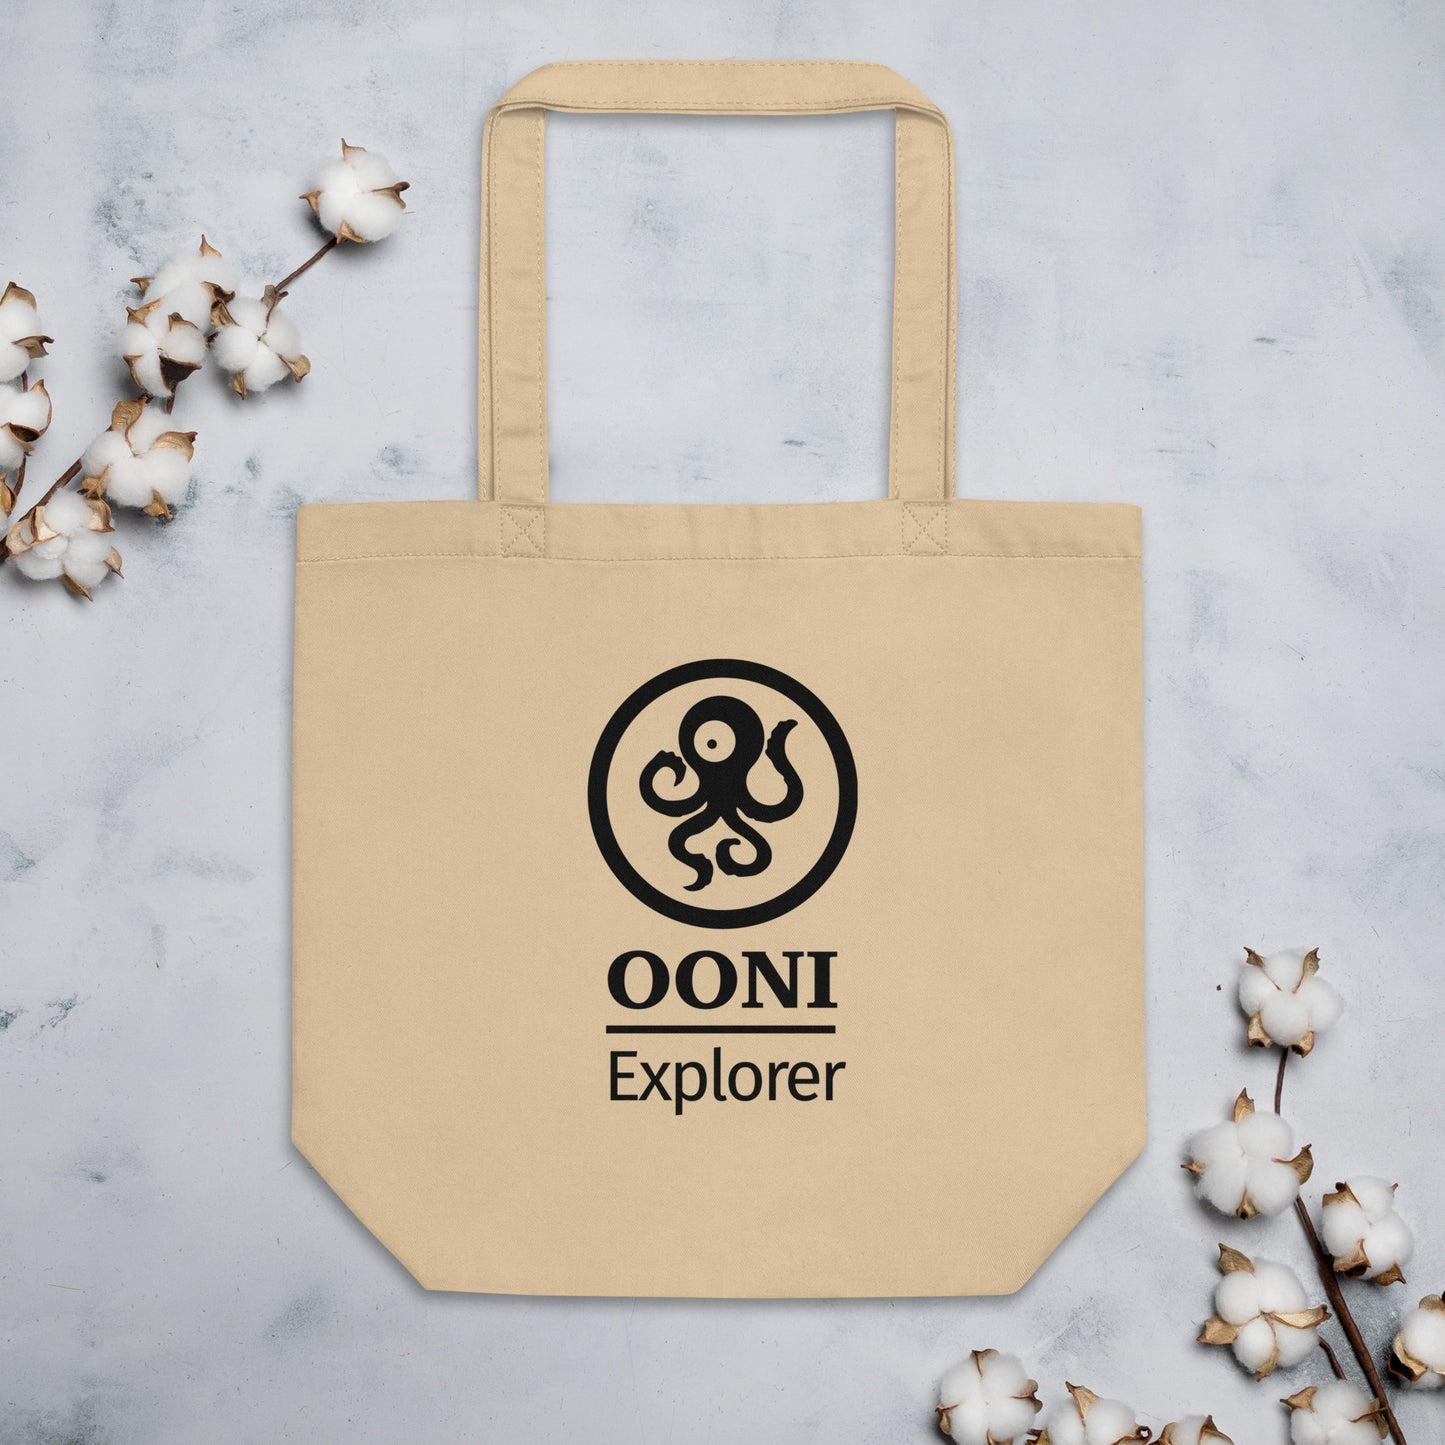 OONI Explorer Eco-Chic Tote Bag